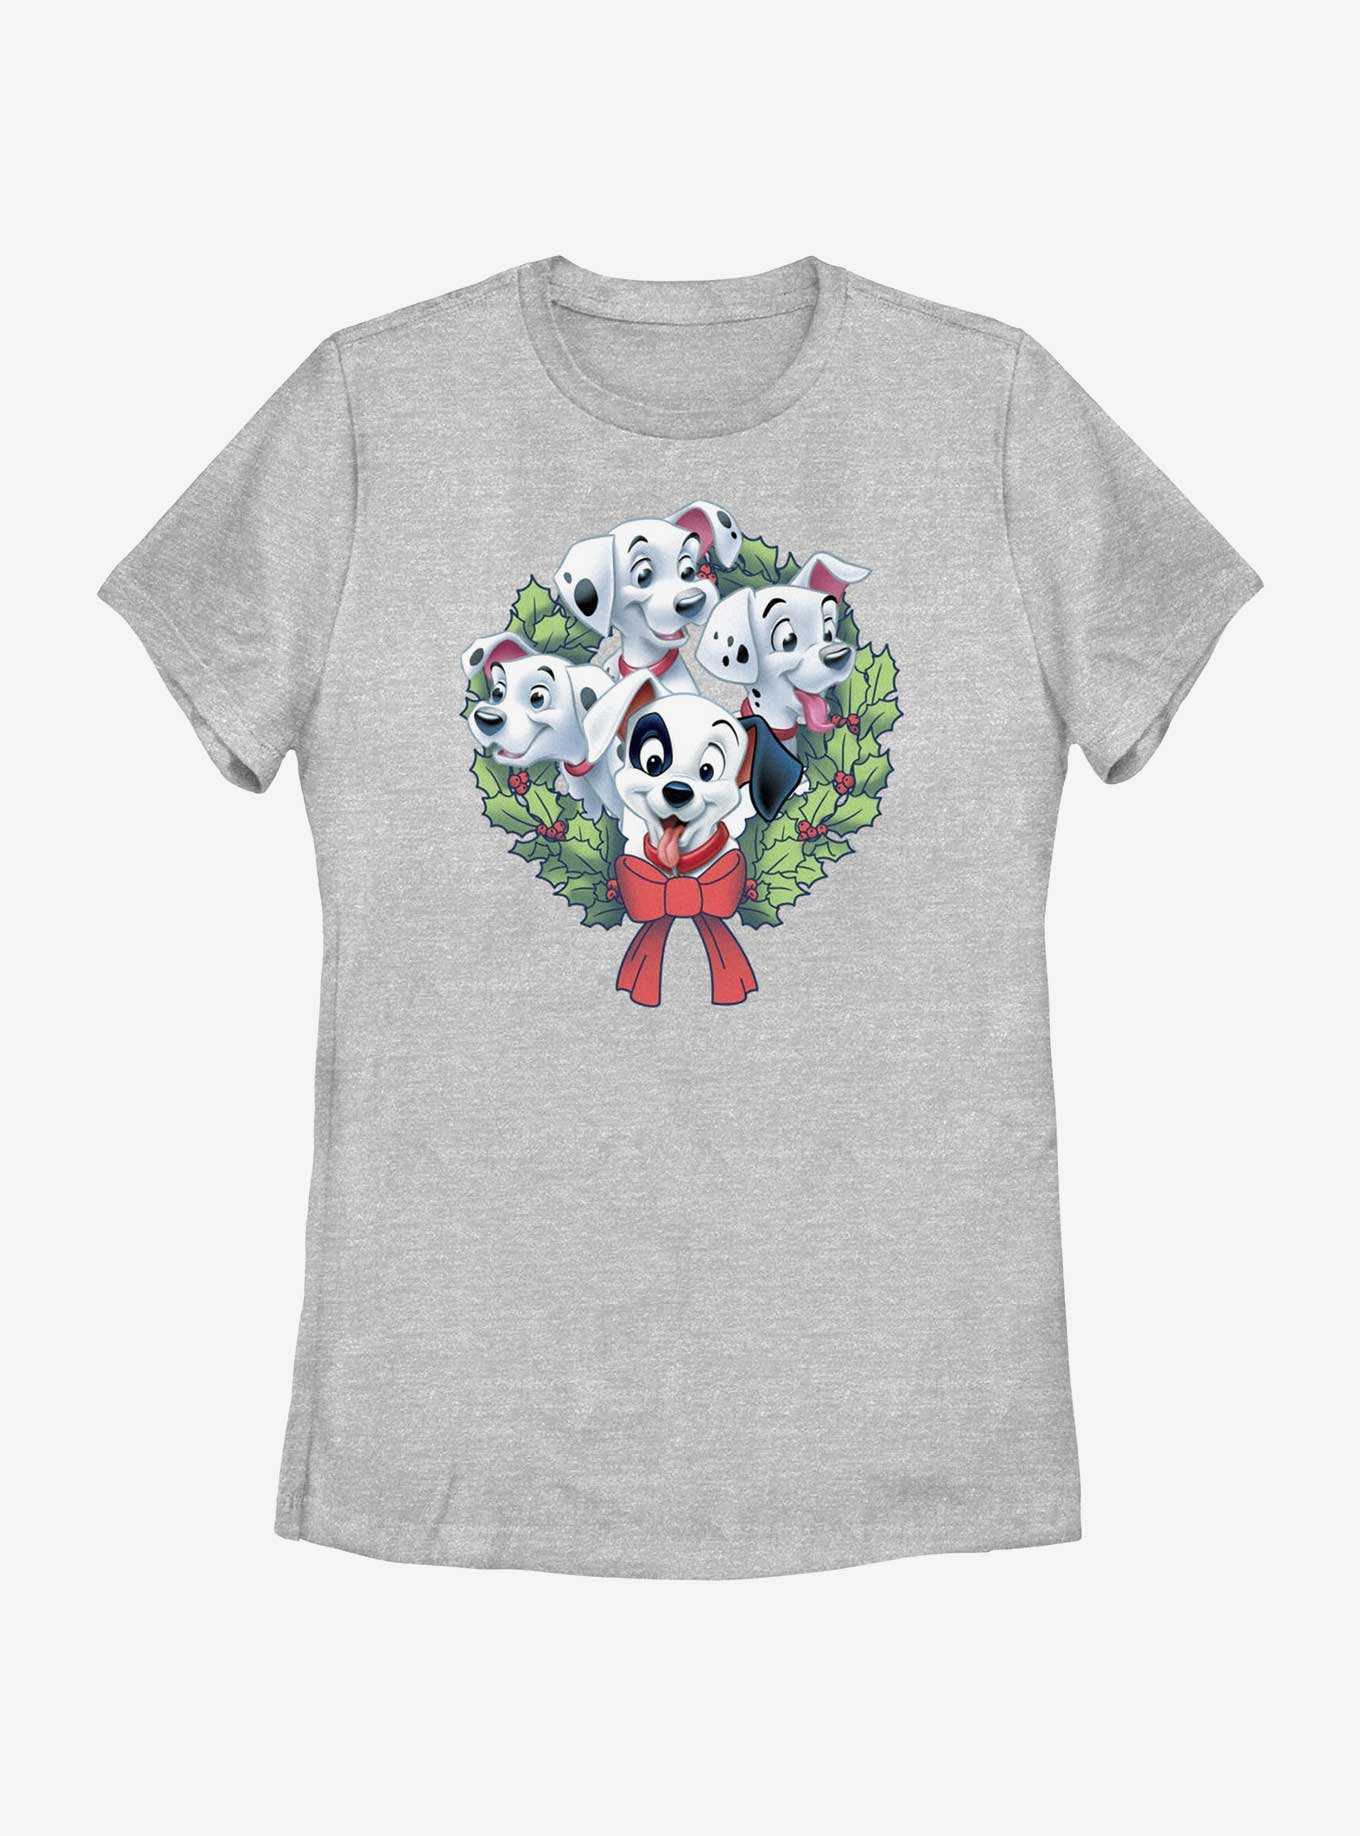 Disney Brand Junior Women's Black 101 Dalmatians T-Shirt Puppy Dog Size XL  15-17